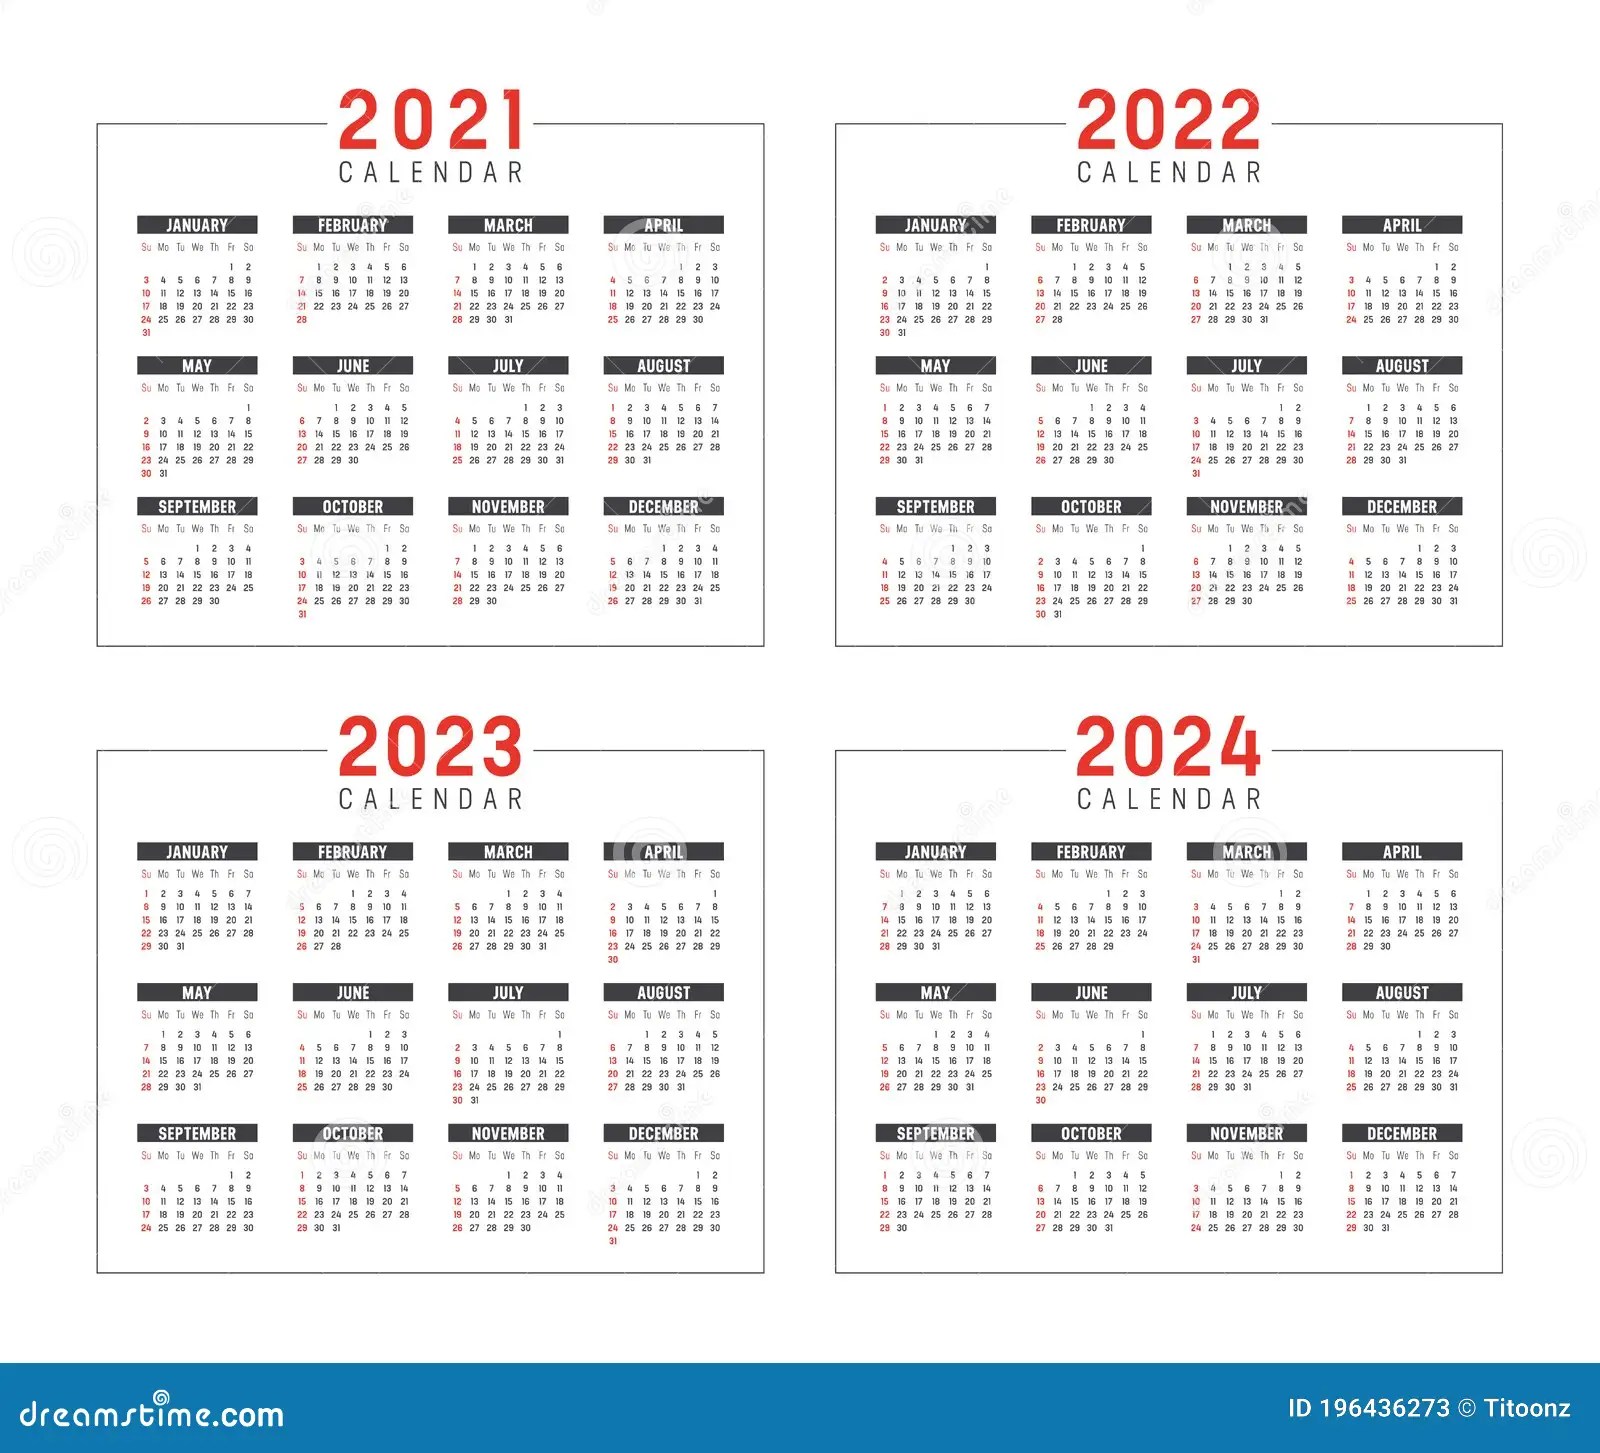 Nau 202324 Calendar Printable Calendar 2023